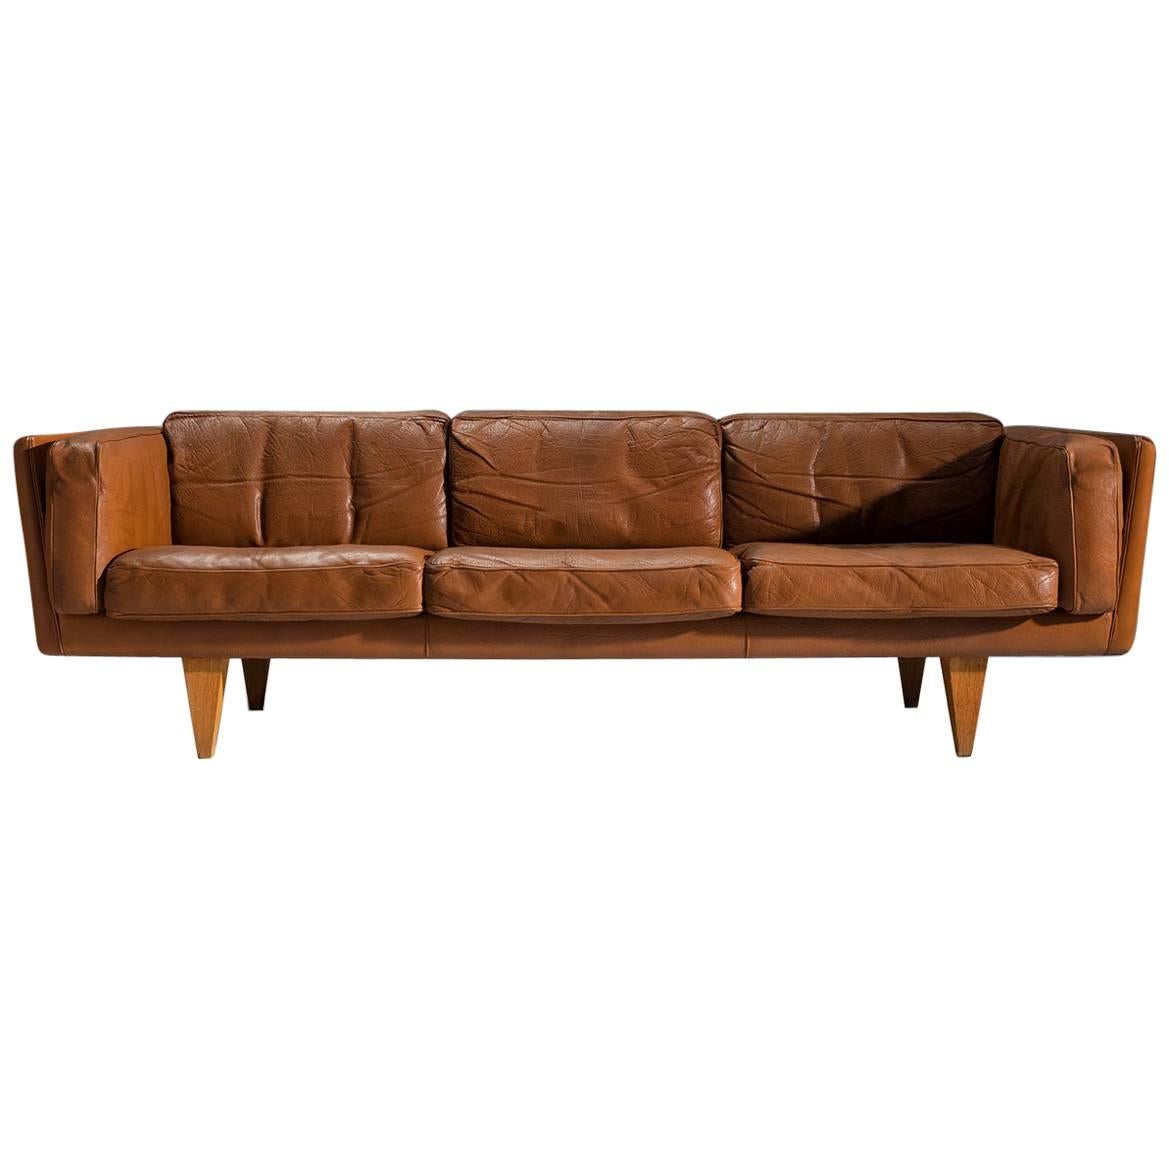 Illum Wikkelsø Restored Three-Seat Sofa in Cognac Leather